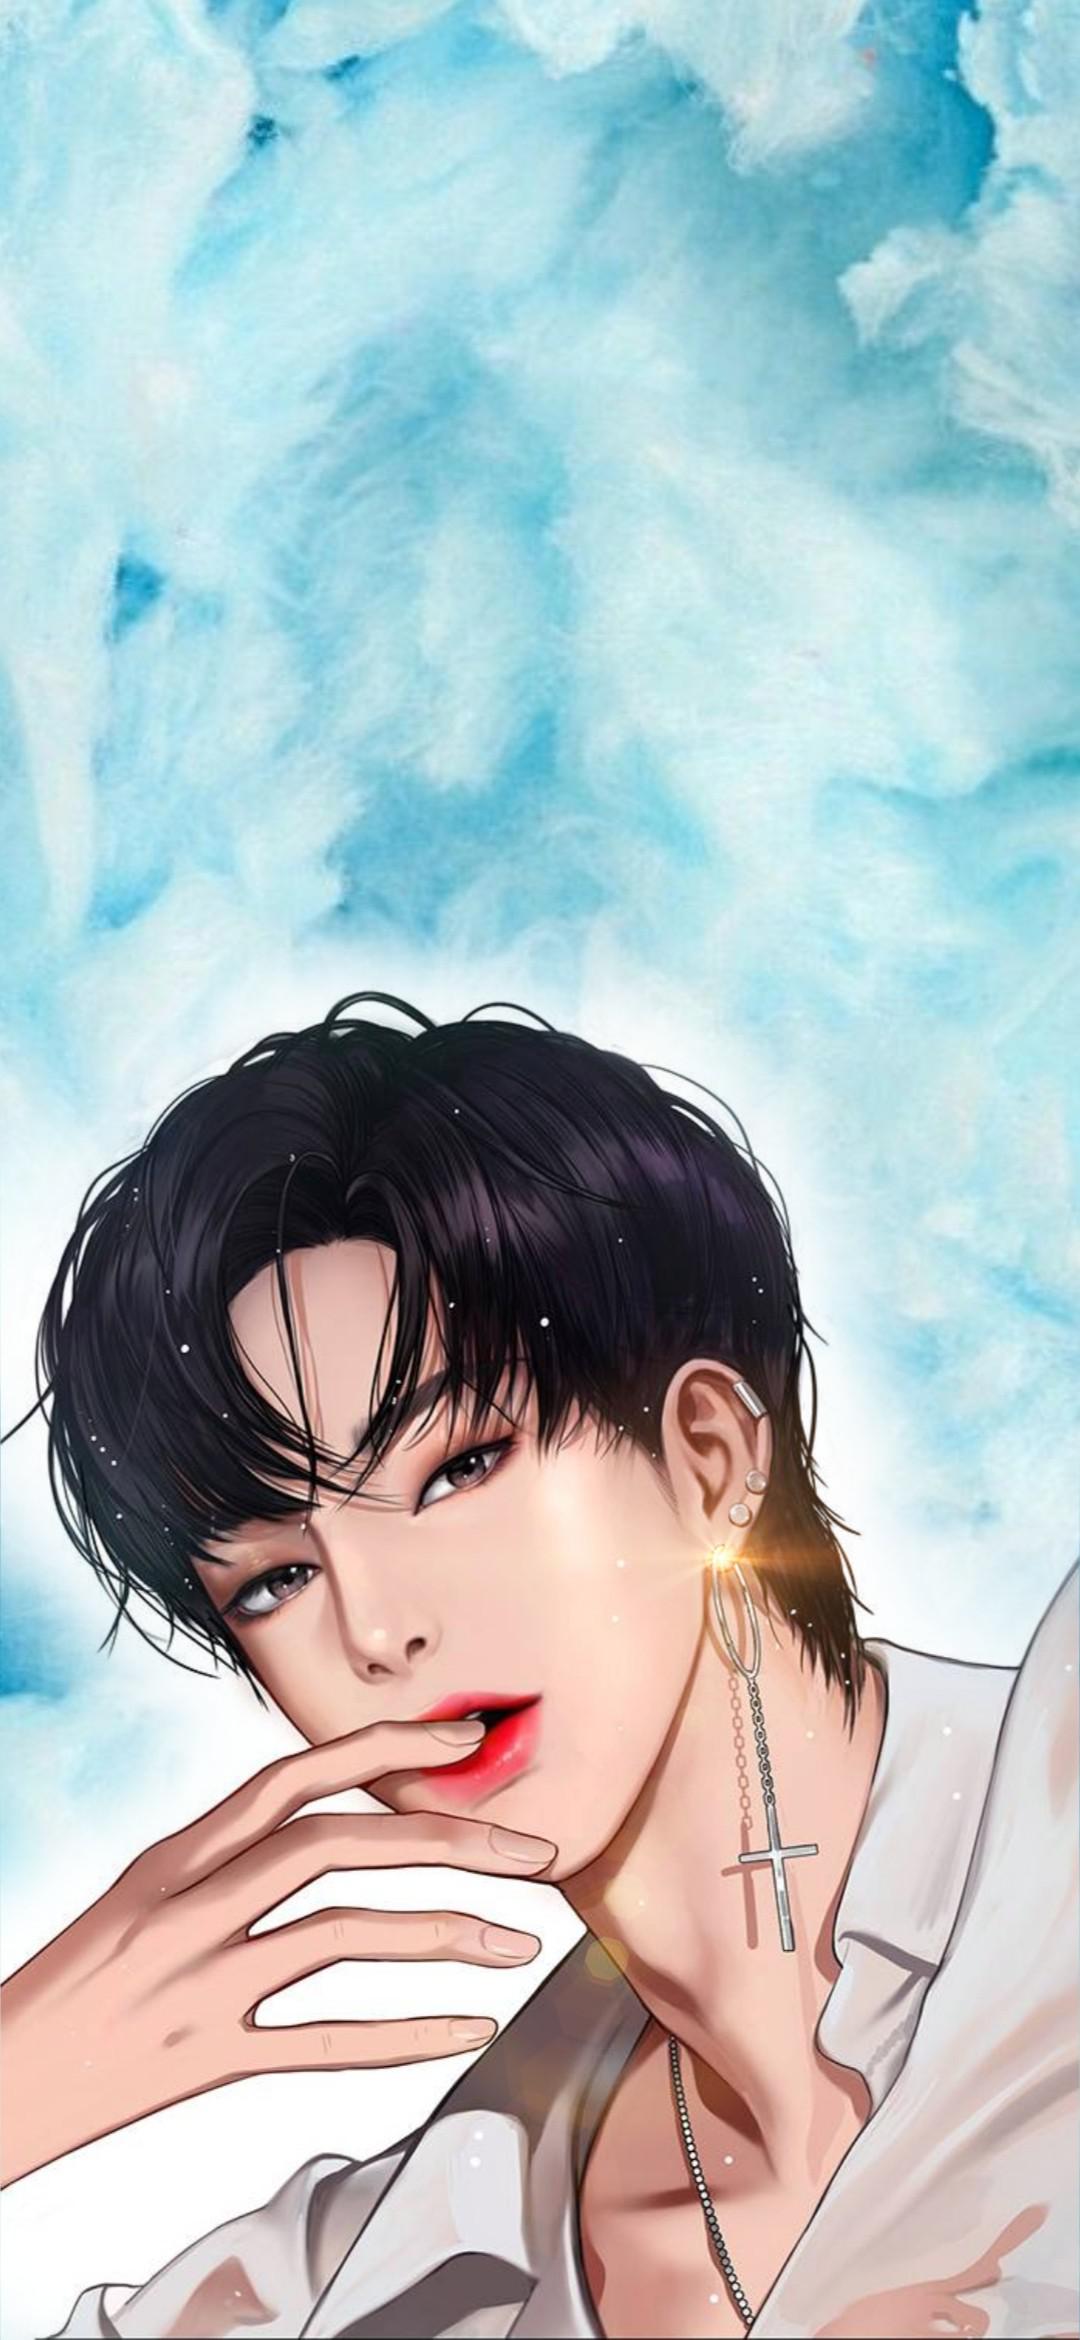 a wallpaper for seojun! this one, damn he's so hot